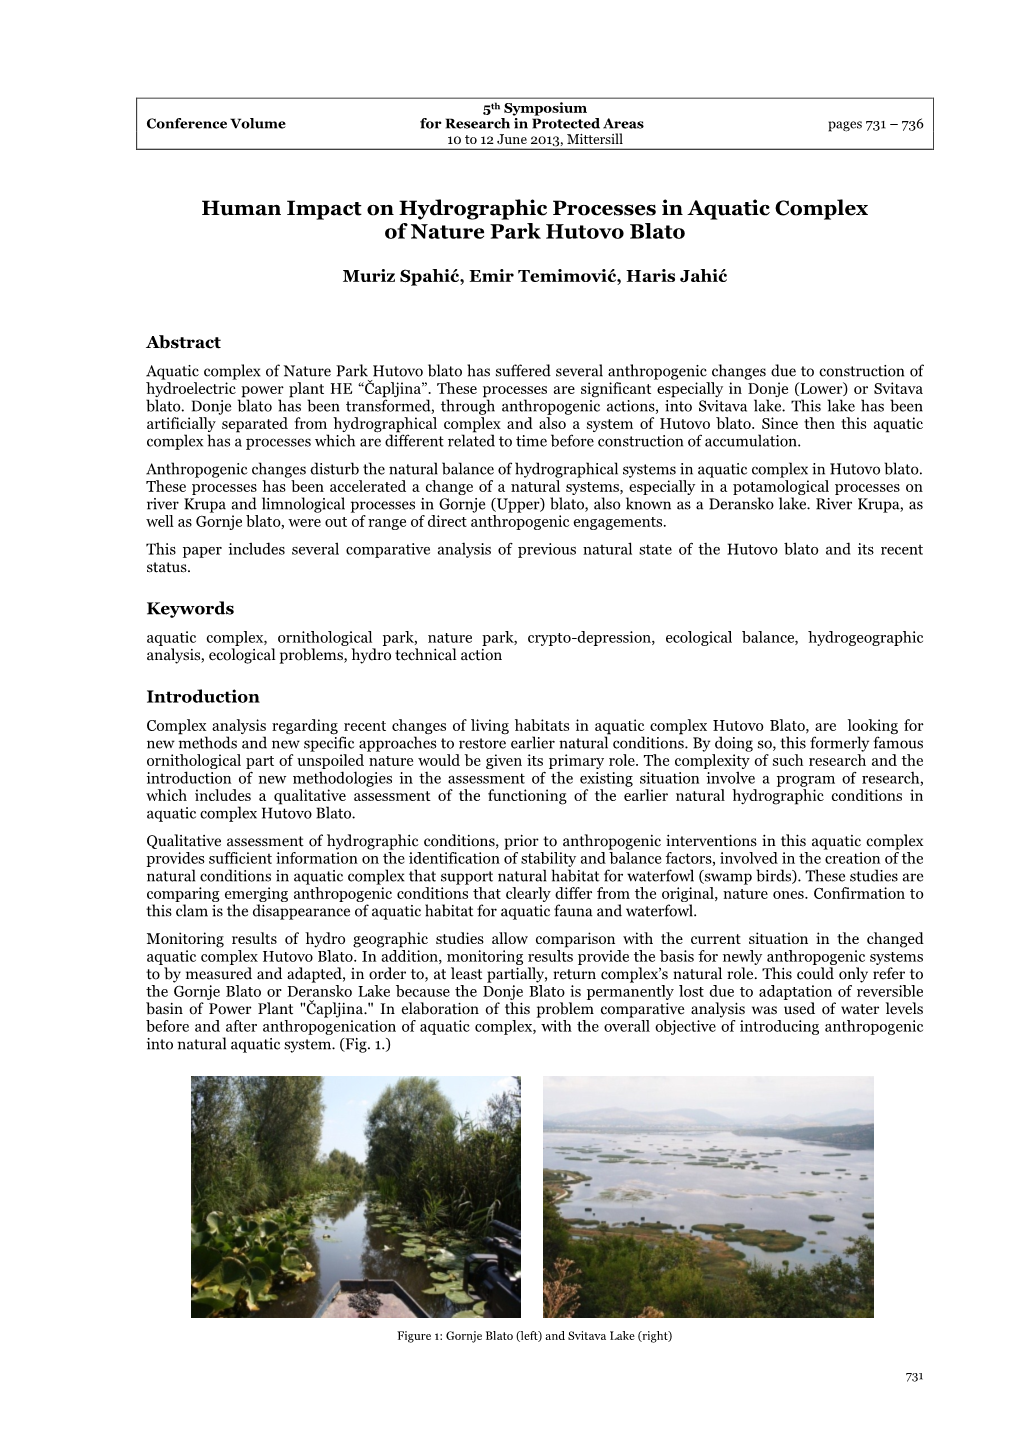 Human Impact on Hydrographic Processes in Aquatic Complex of Nature Park Hutovo Blato